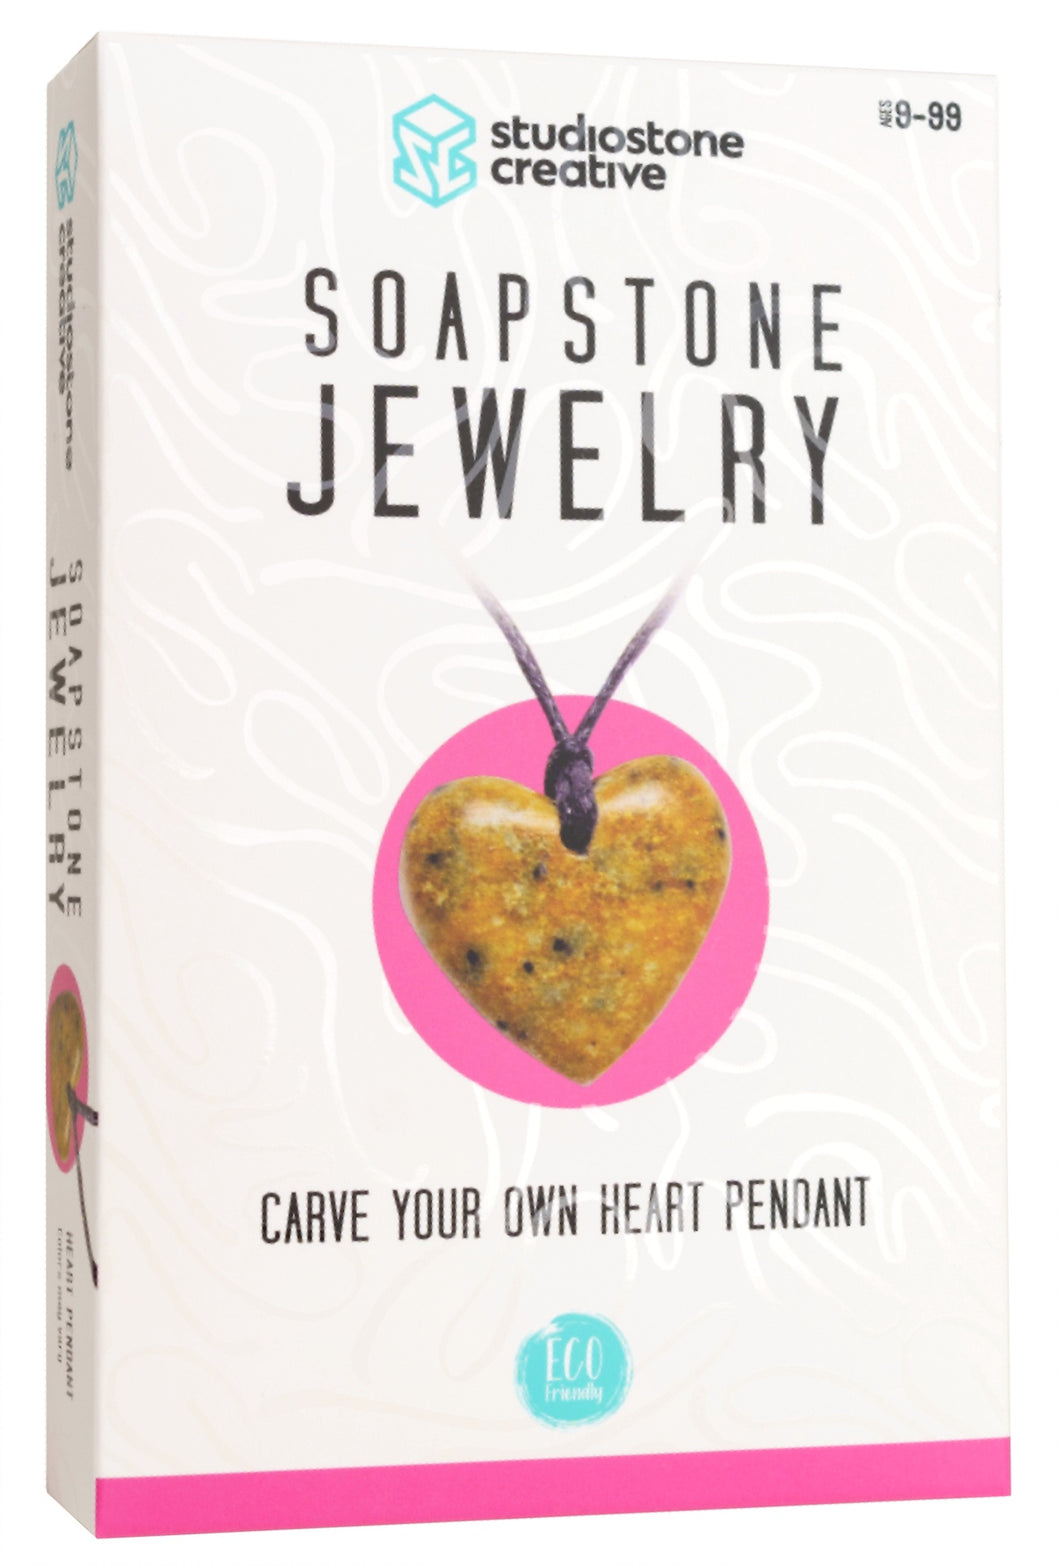 Studiostone Creative Soapstone Jewelry-Heart Pendant